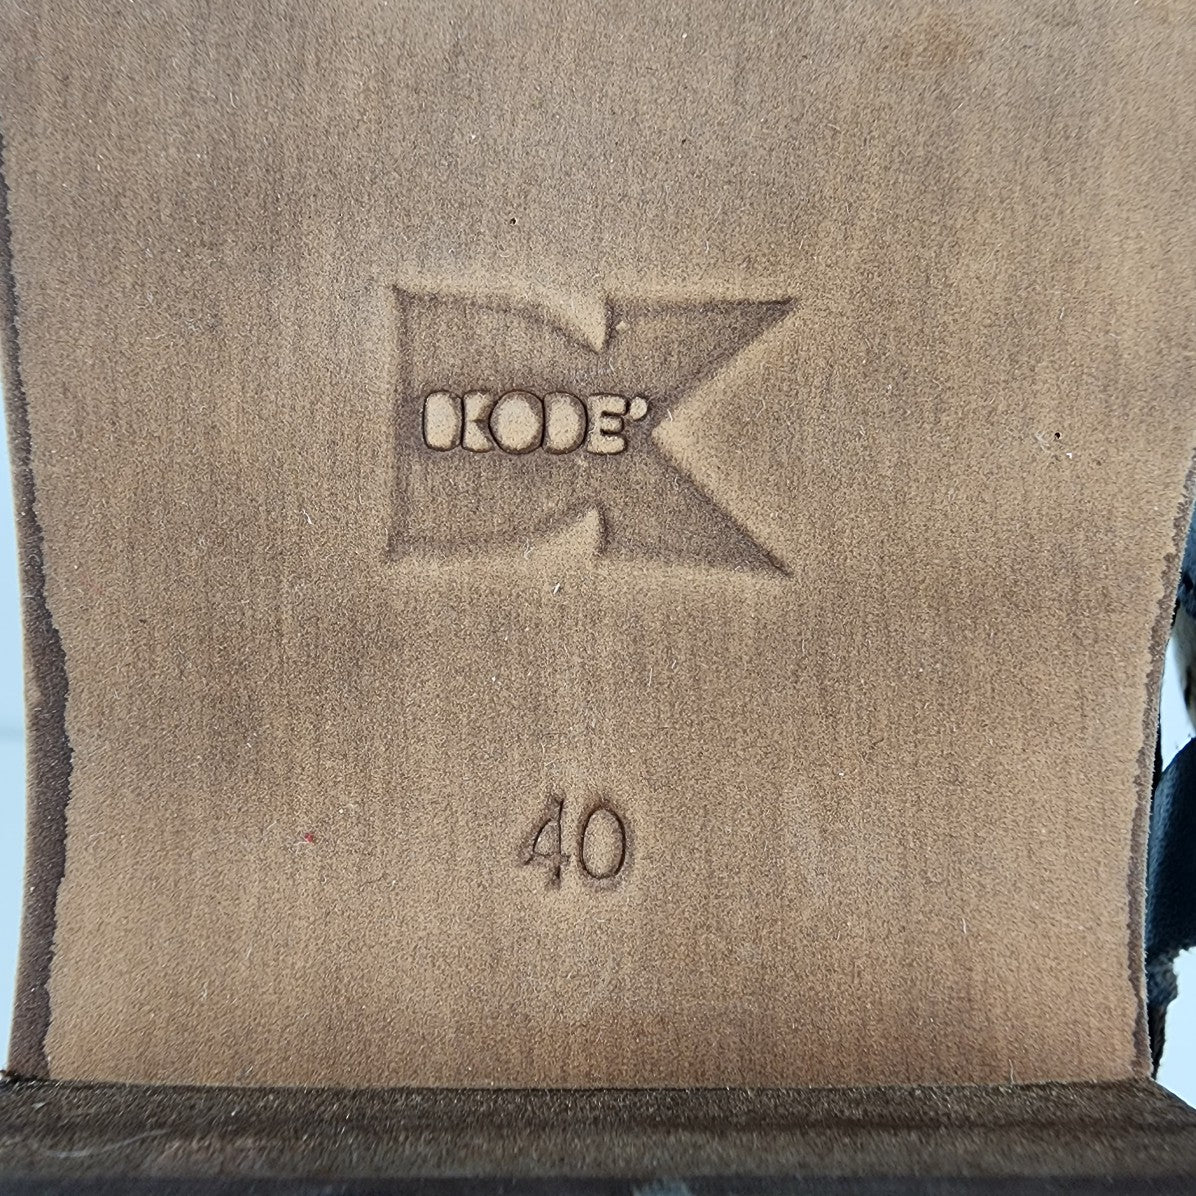 Dkode Blue Leather Sling Back Mule Shoes Size 8.5